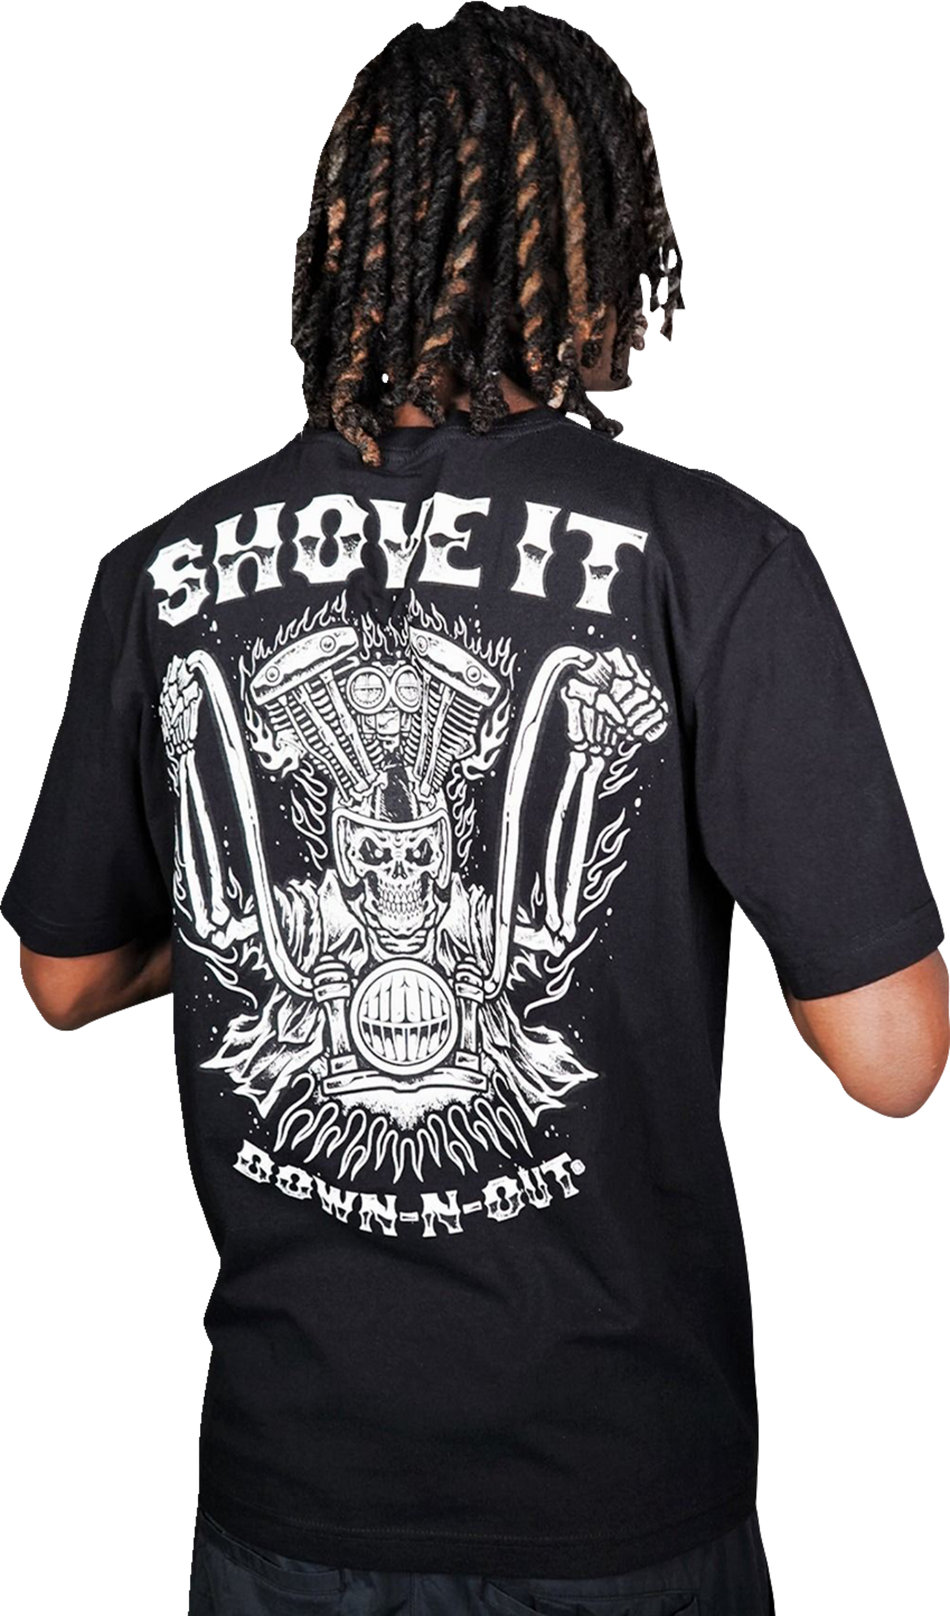 LETHAL THREAT Down-N-Out Shove It T-Shirt - Black - 2XL DT10046XXL